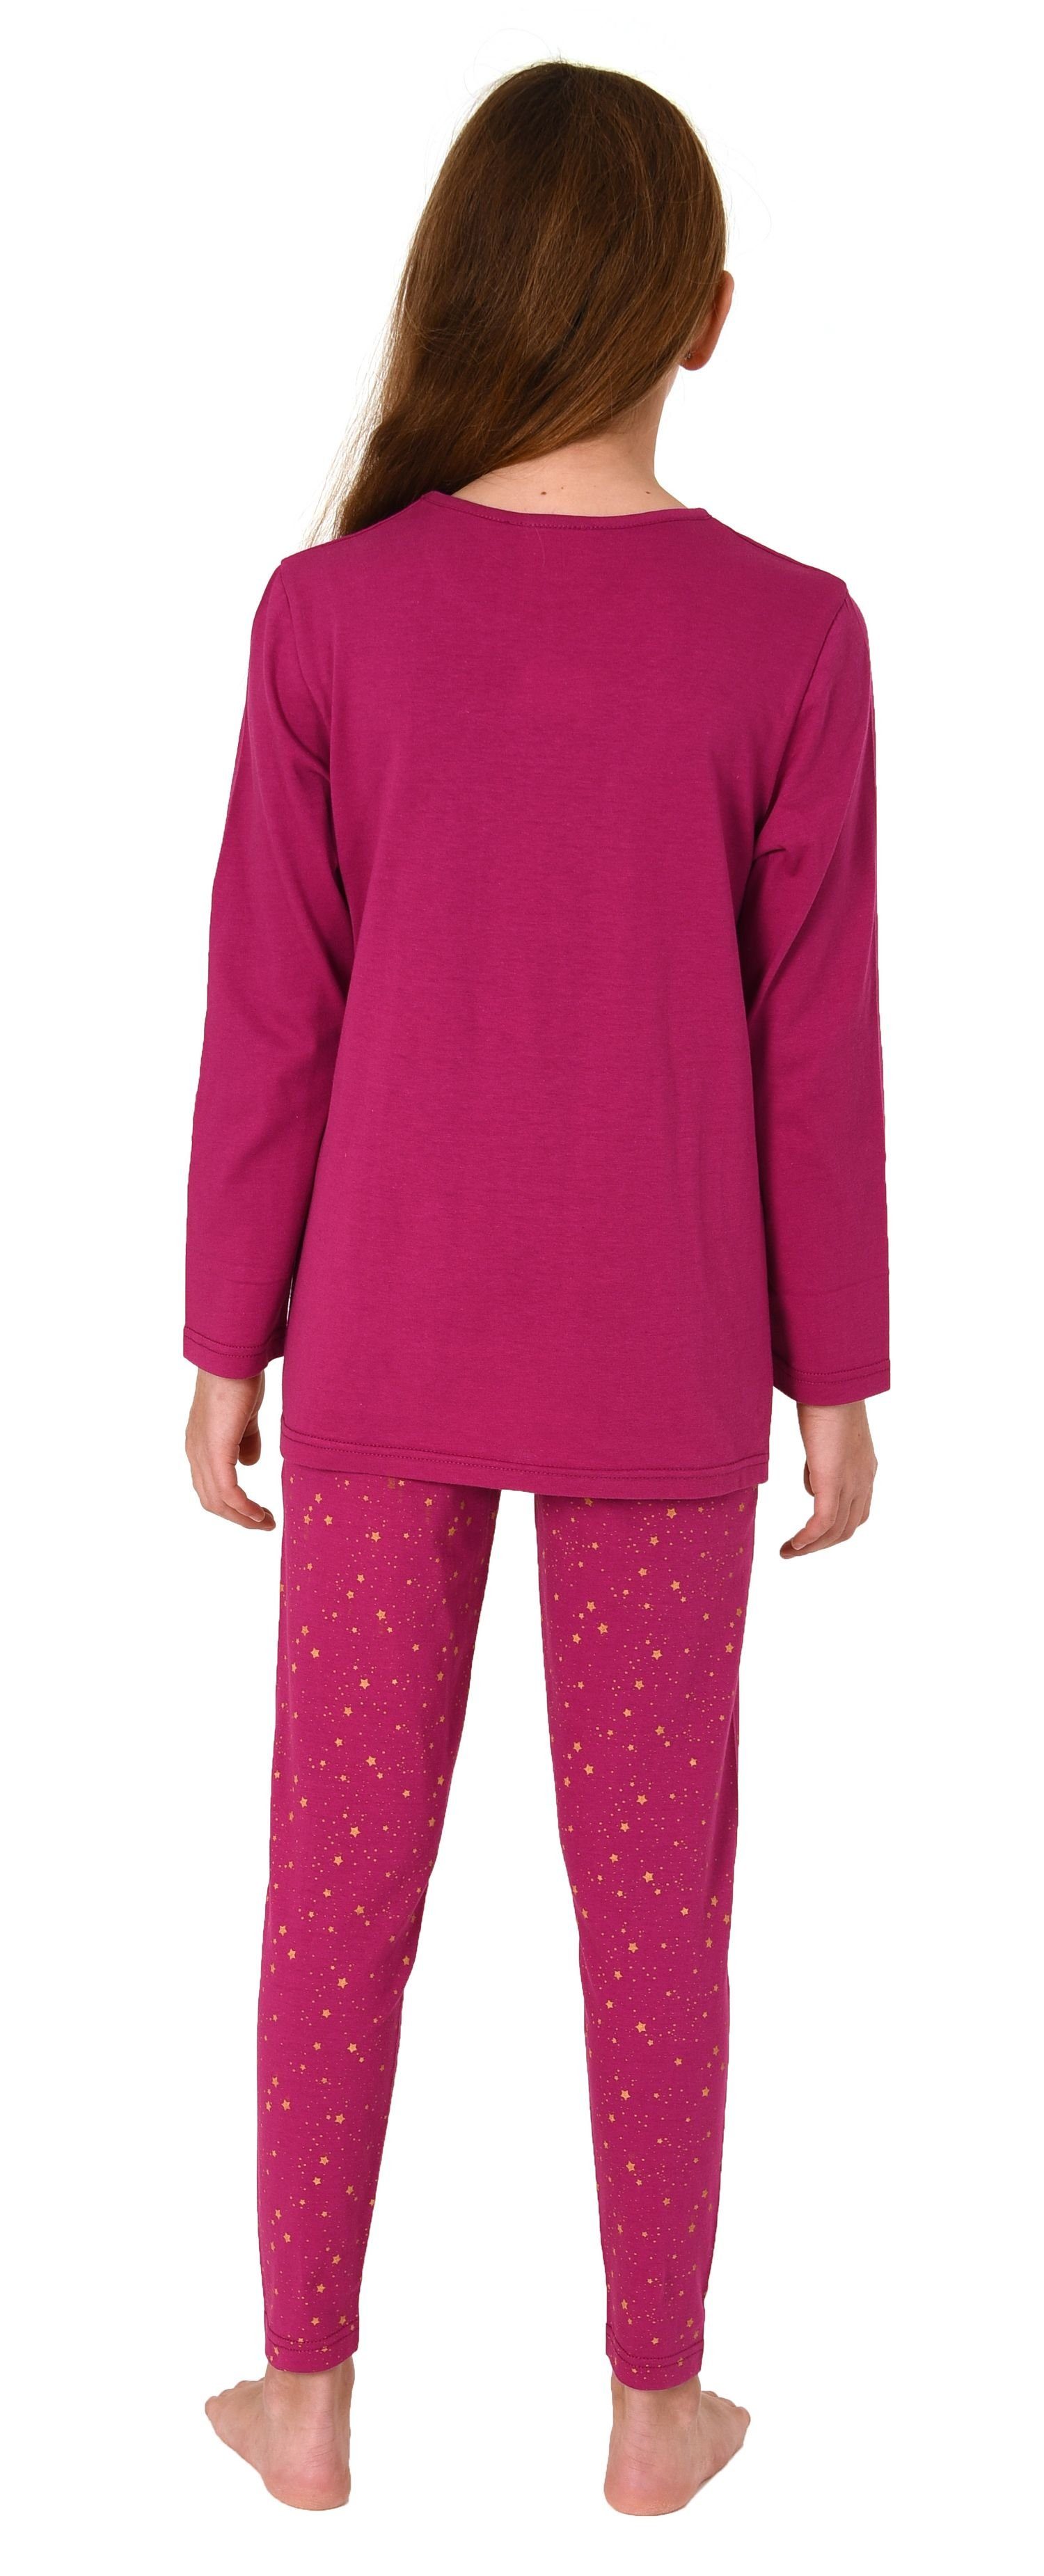 Normann Pyjama Mädchen beere Pyjama Schlafanzug, Schöner mit langärmliger Motiv süßem